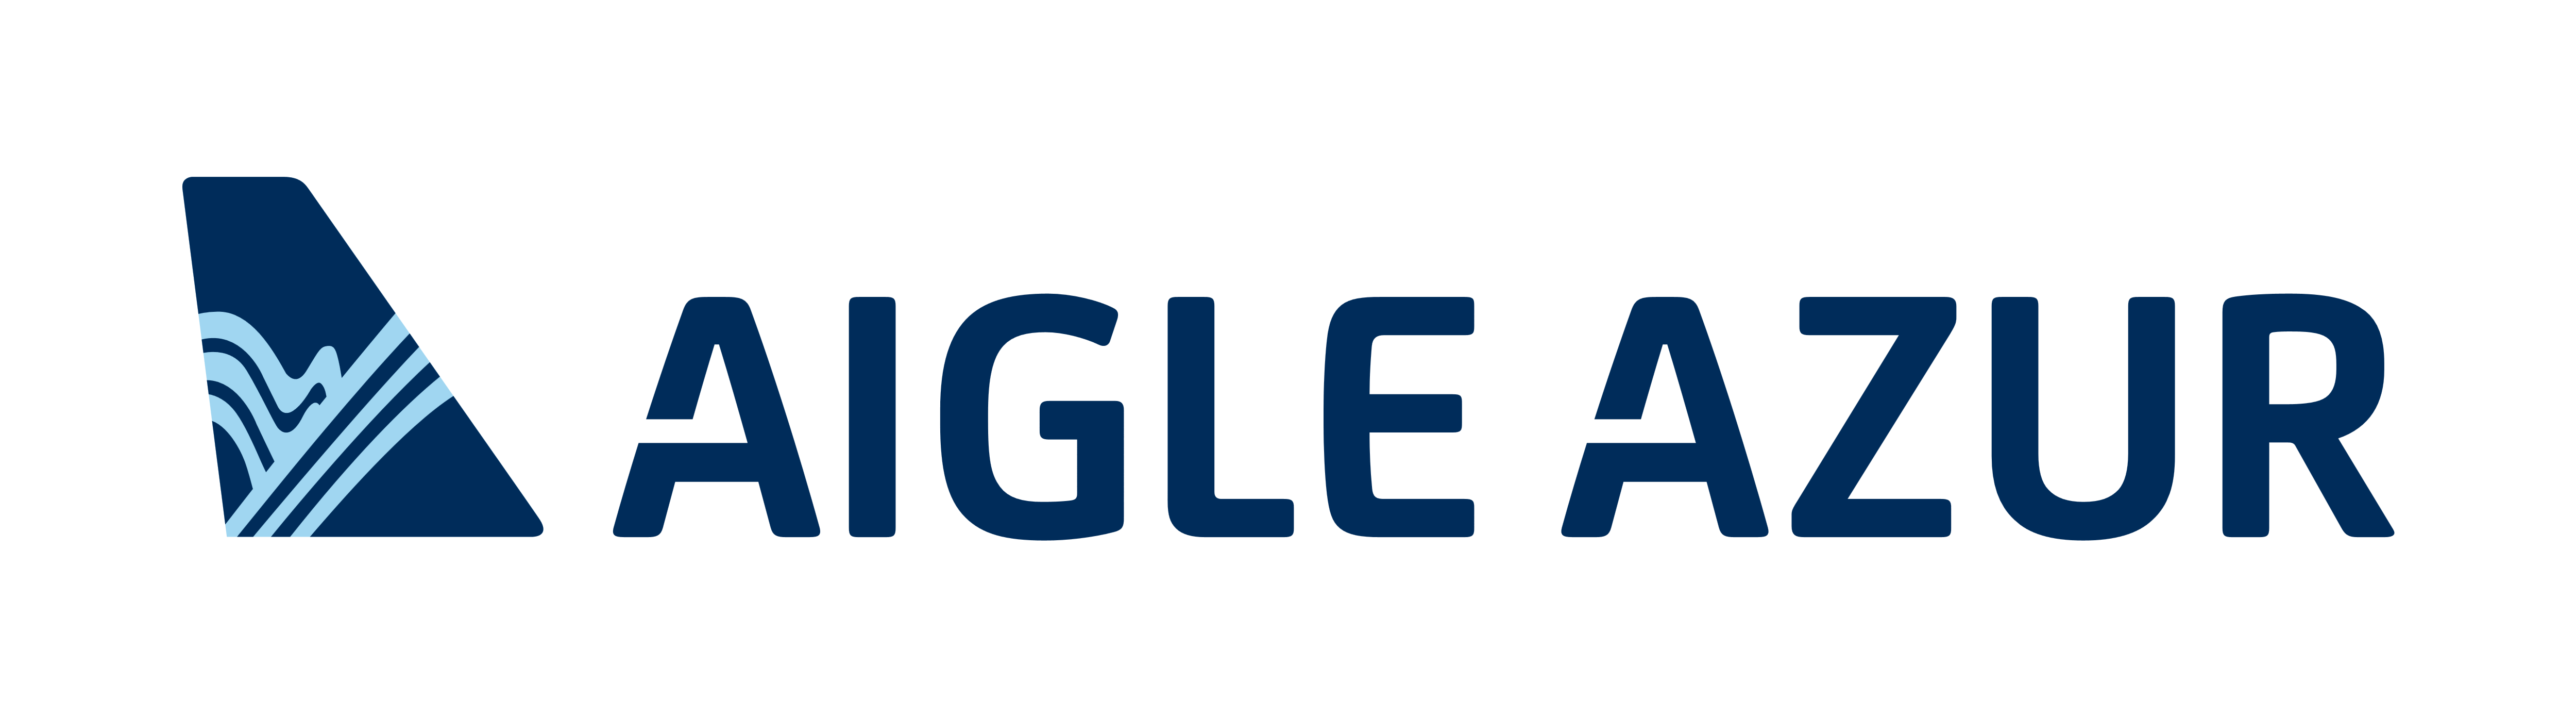 Aigle Azur Logo, Logotype, Emblem - Aigle, Transparent background PNG HD thumbnail